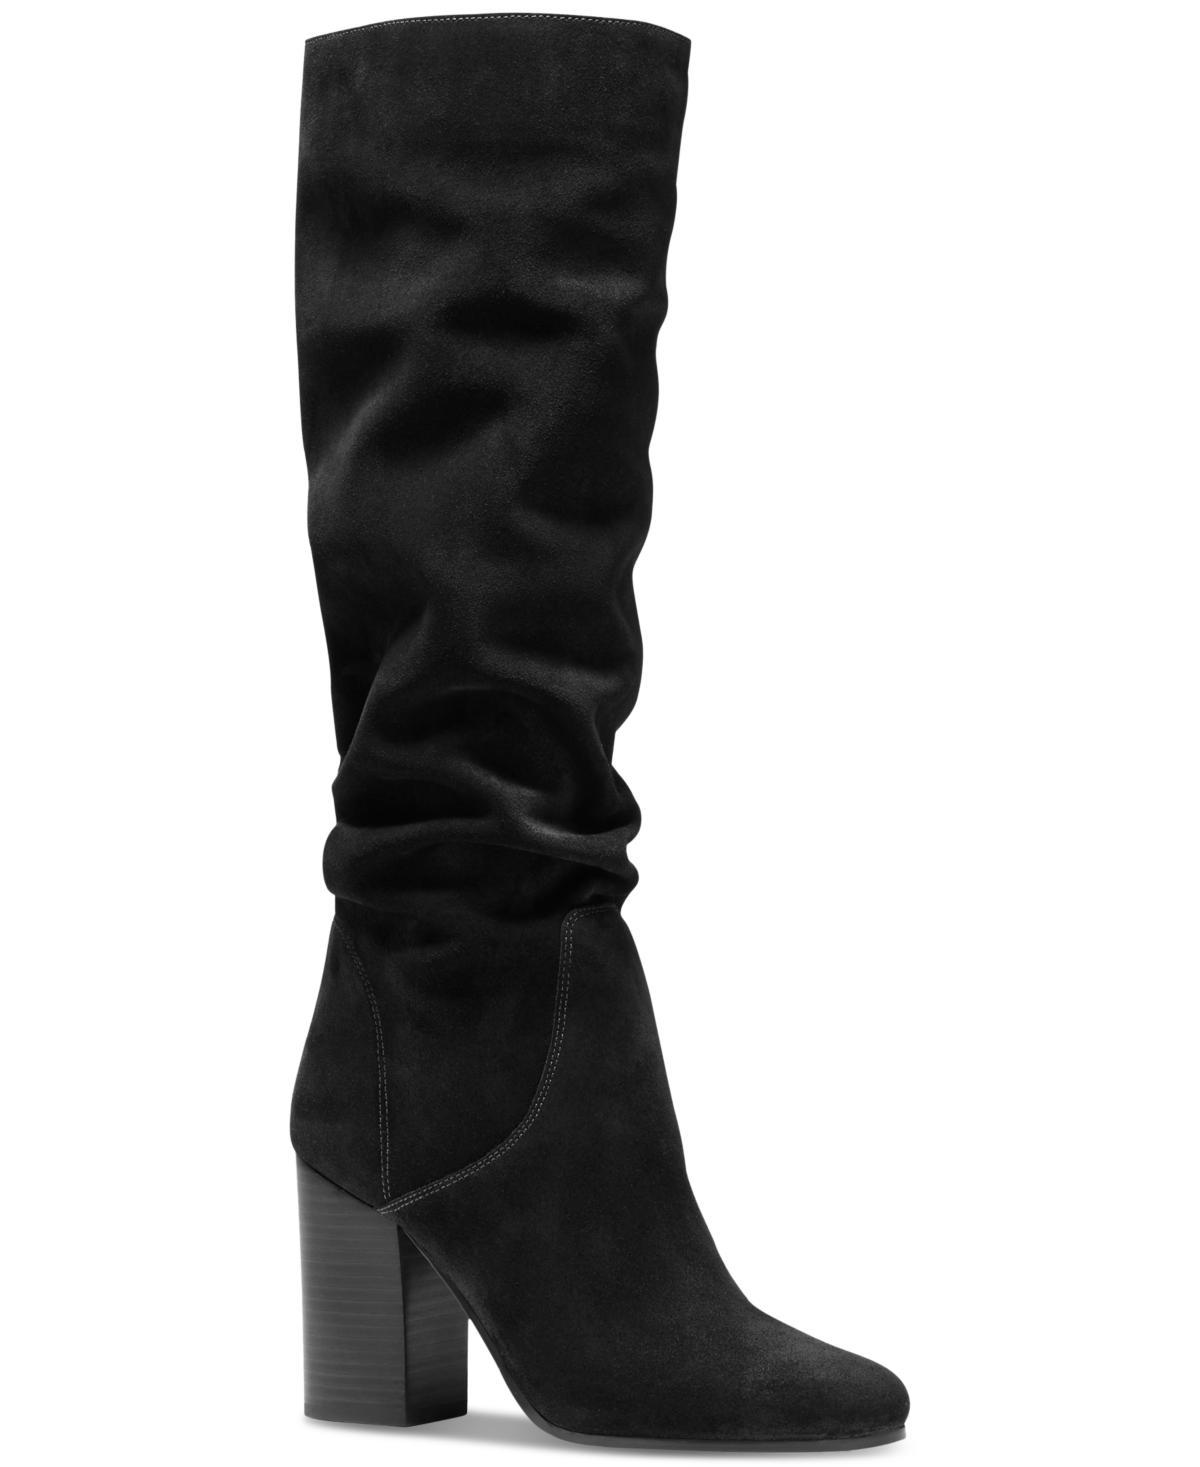 Vince Camuto Illishal Boot   Women's   Black   Size 7.5   Boots   Block   Platform Product Image